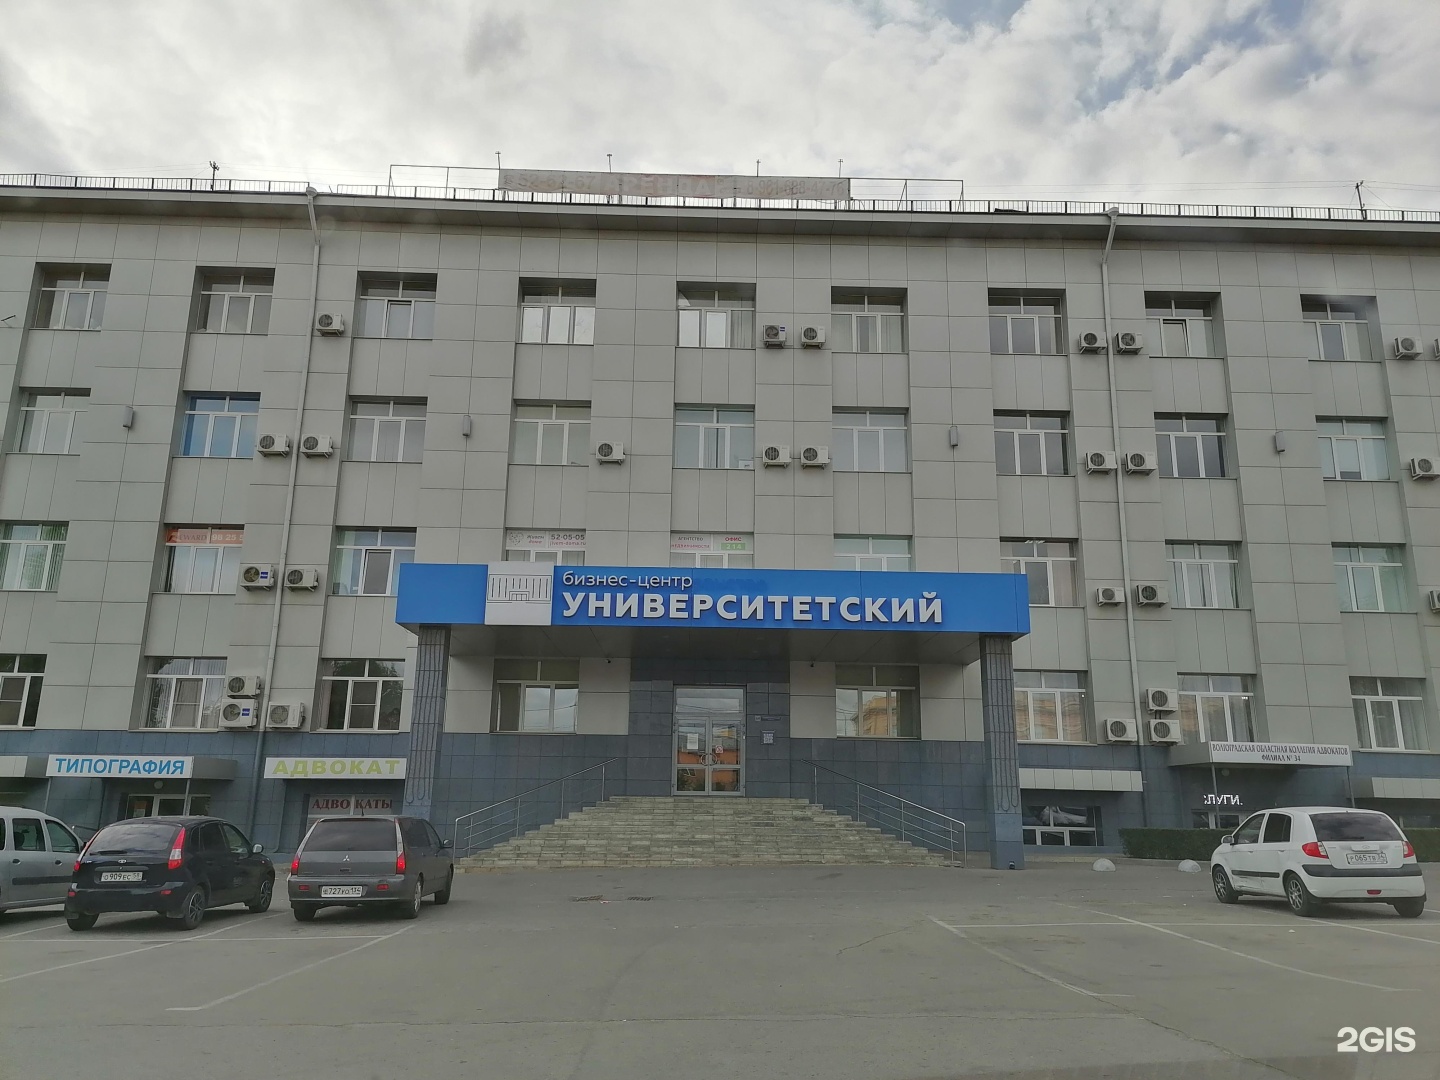 Бизнес центр Университетский проспект 64 Волгоград-